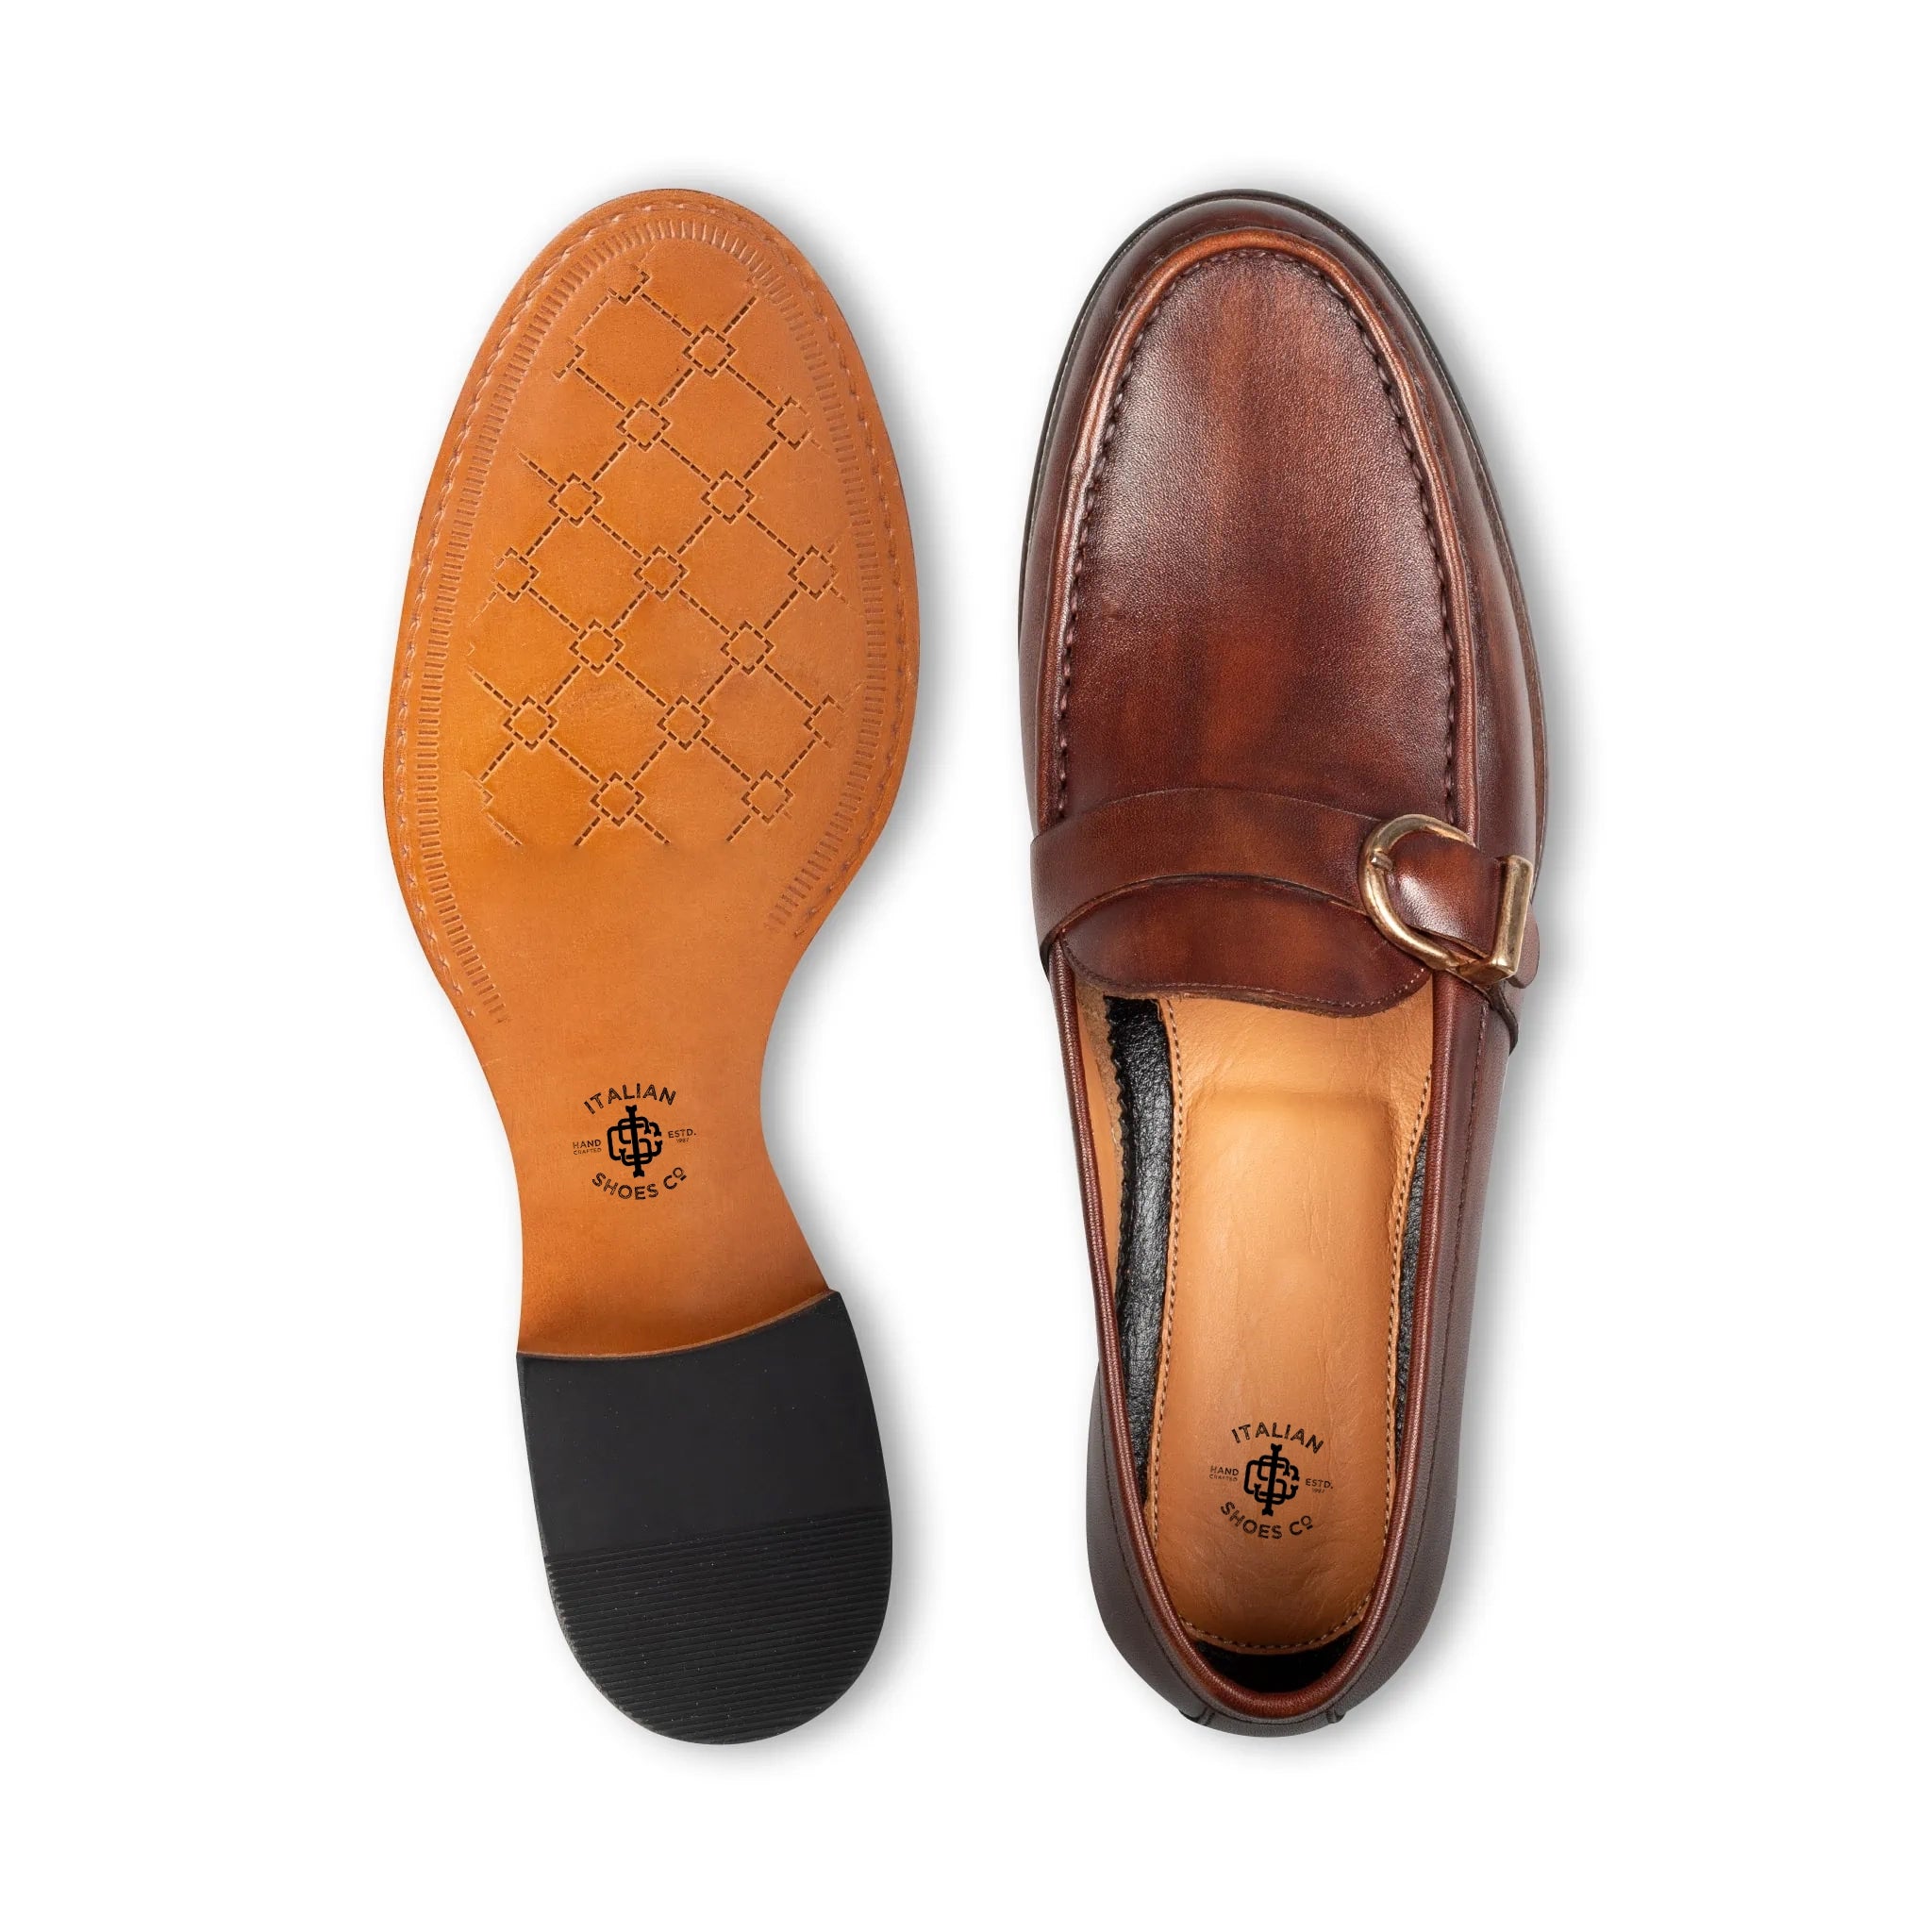 Enzo Copper Single Monk Strap Shoes